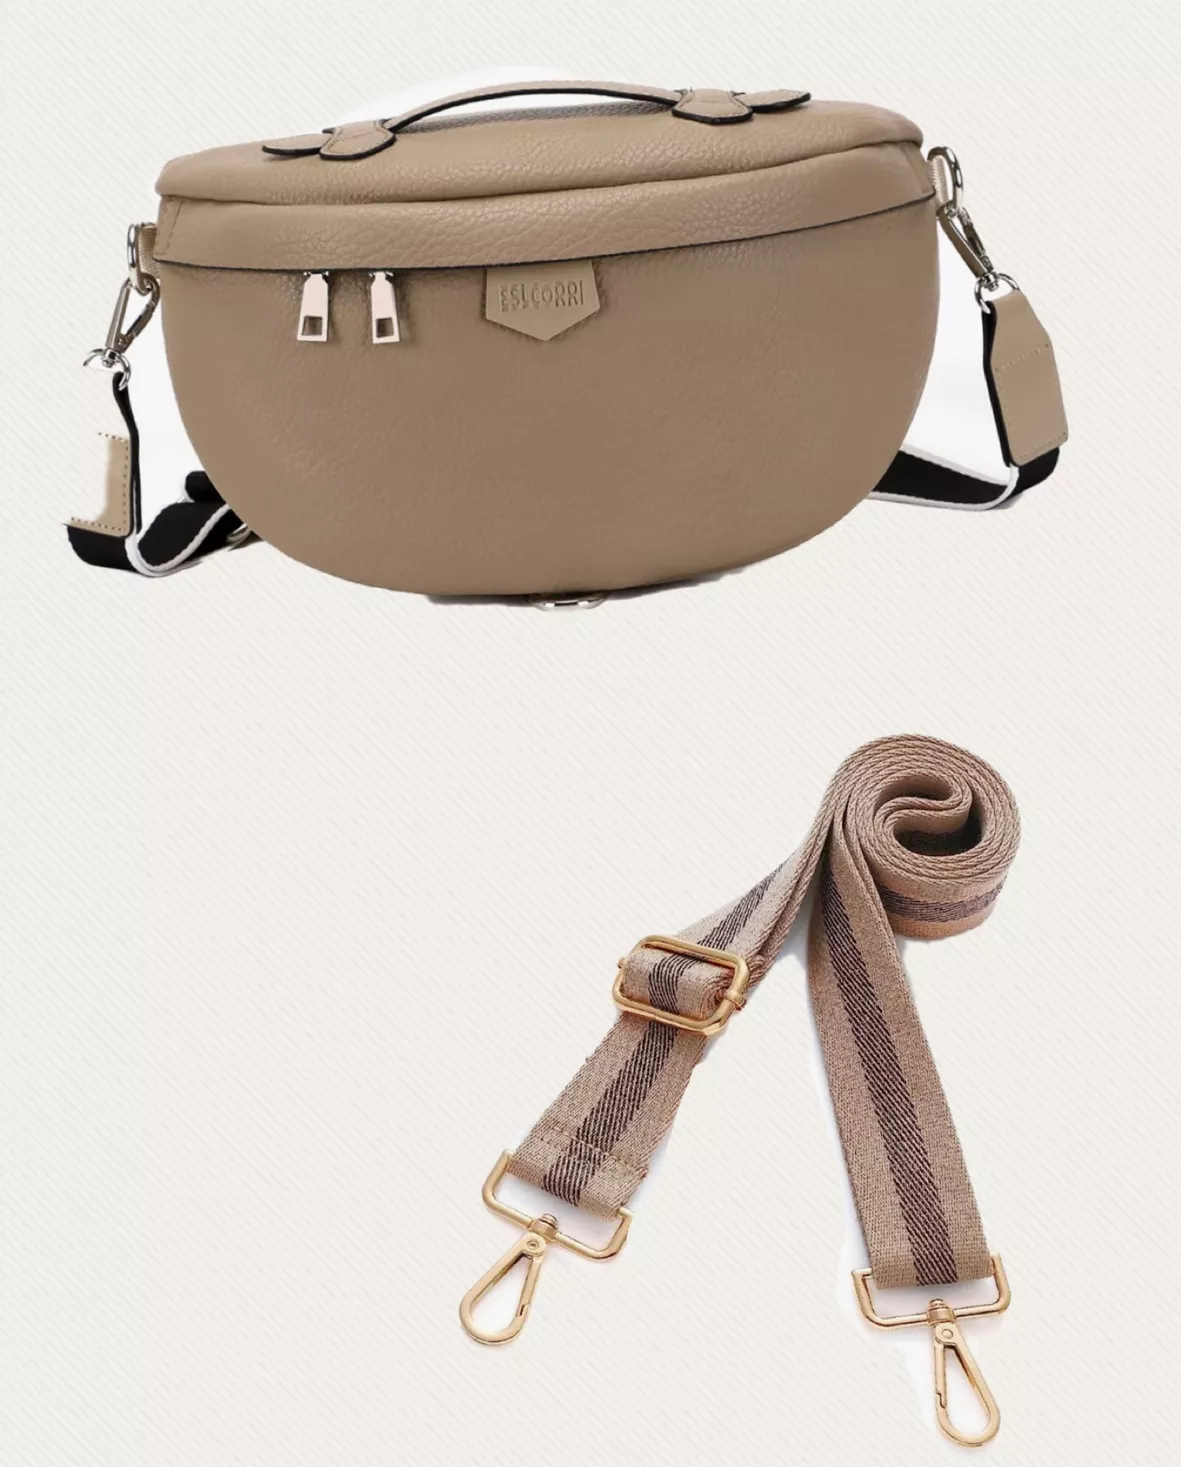 Eslcorri Crossbody Bags for Women … curated on LTK